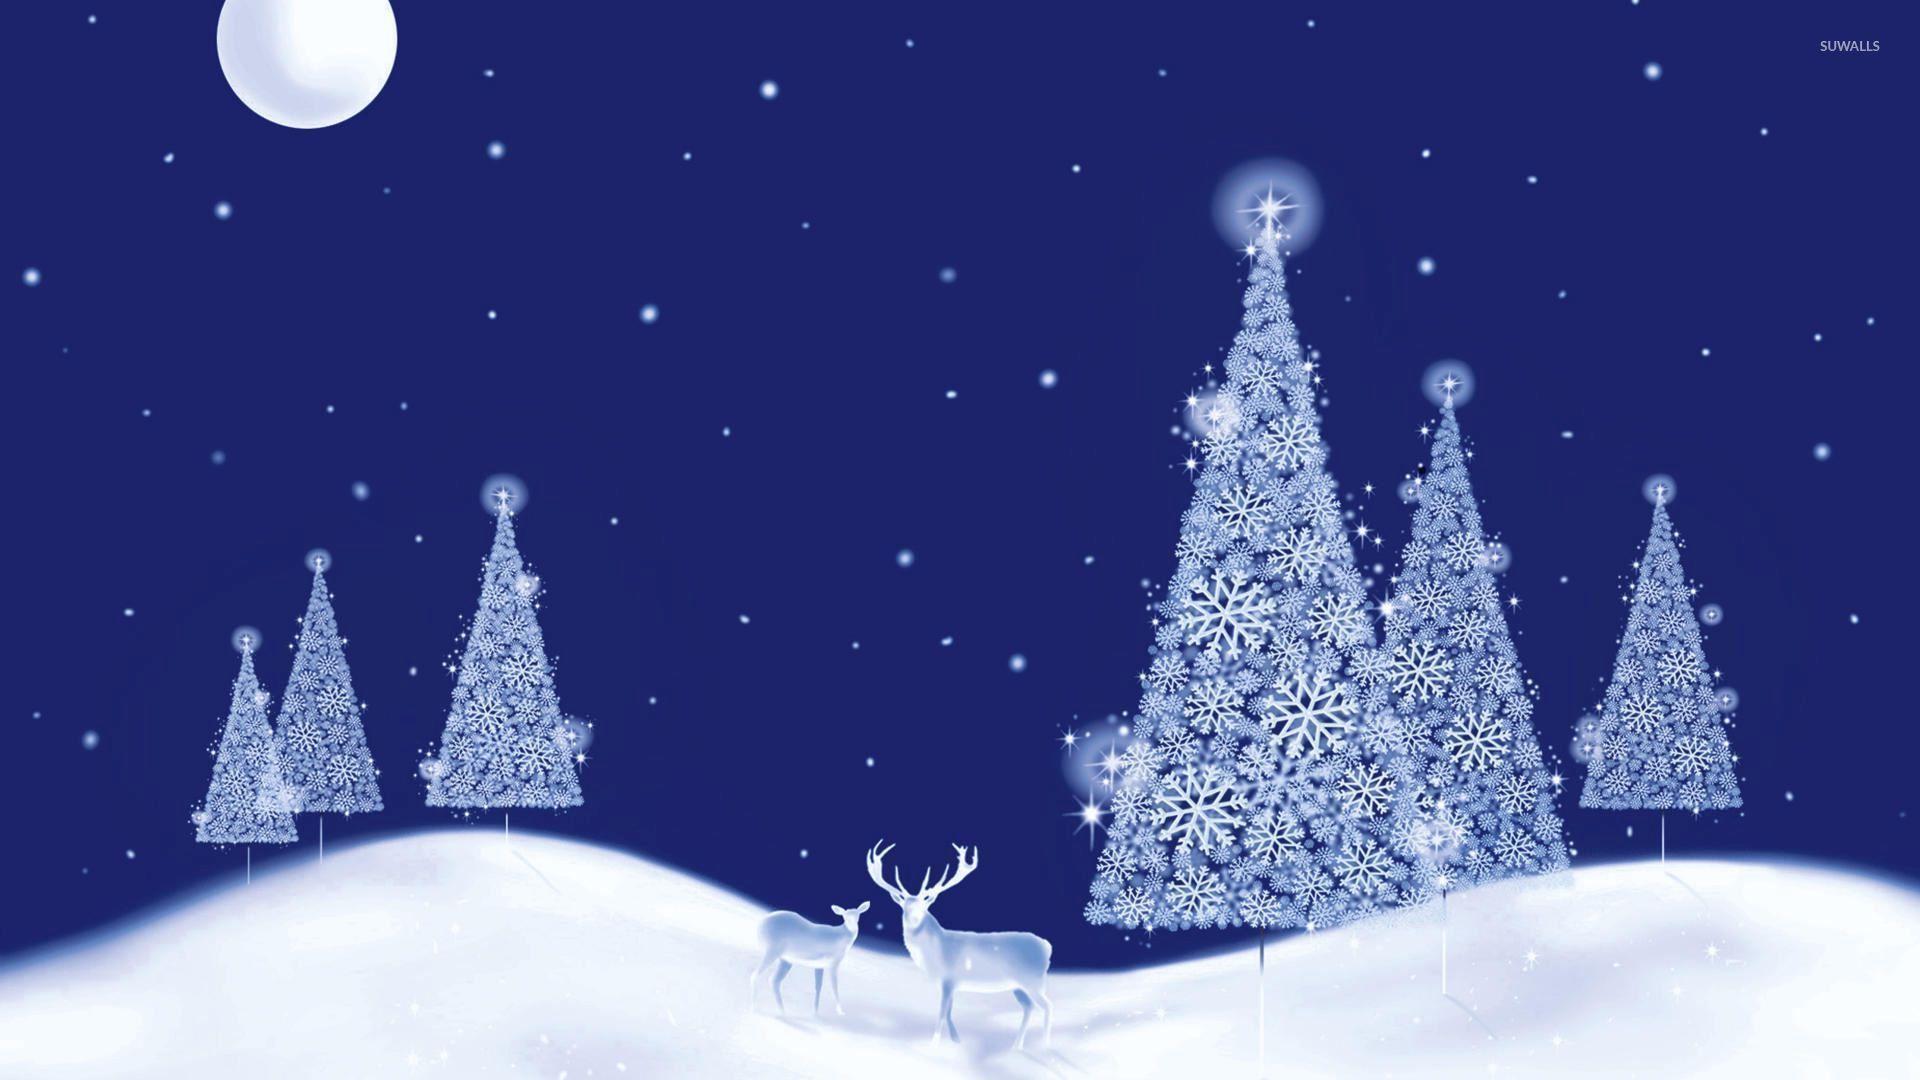 Glowing white Christmas trees on a beautiful winter night wallpaper wallpaper